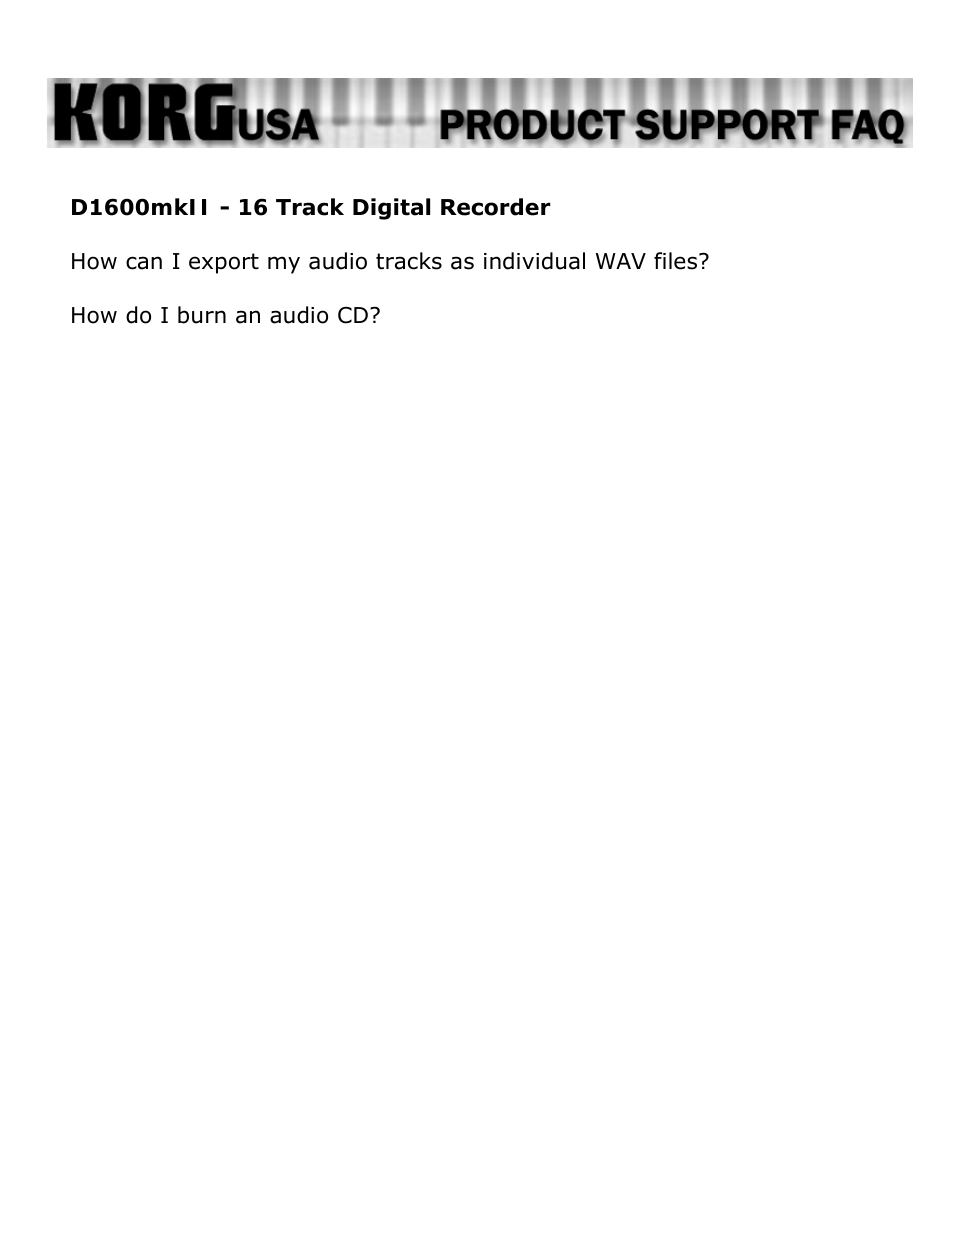 16 Track Digital Recorder D1600mkII